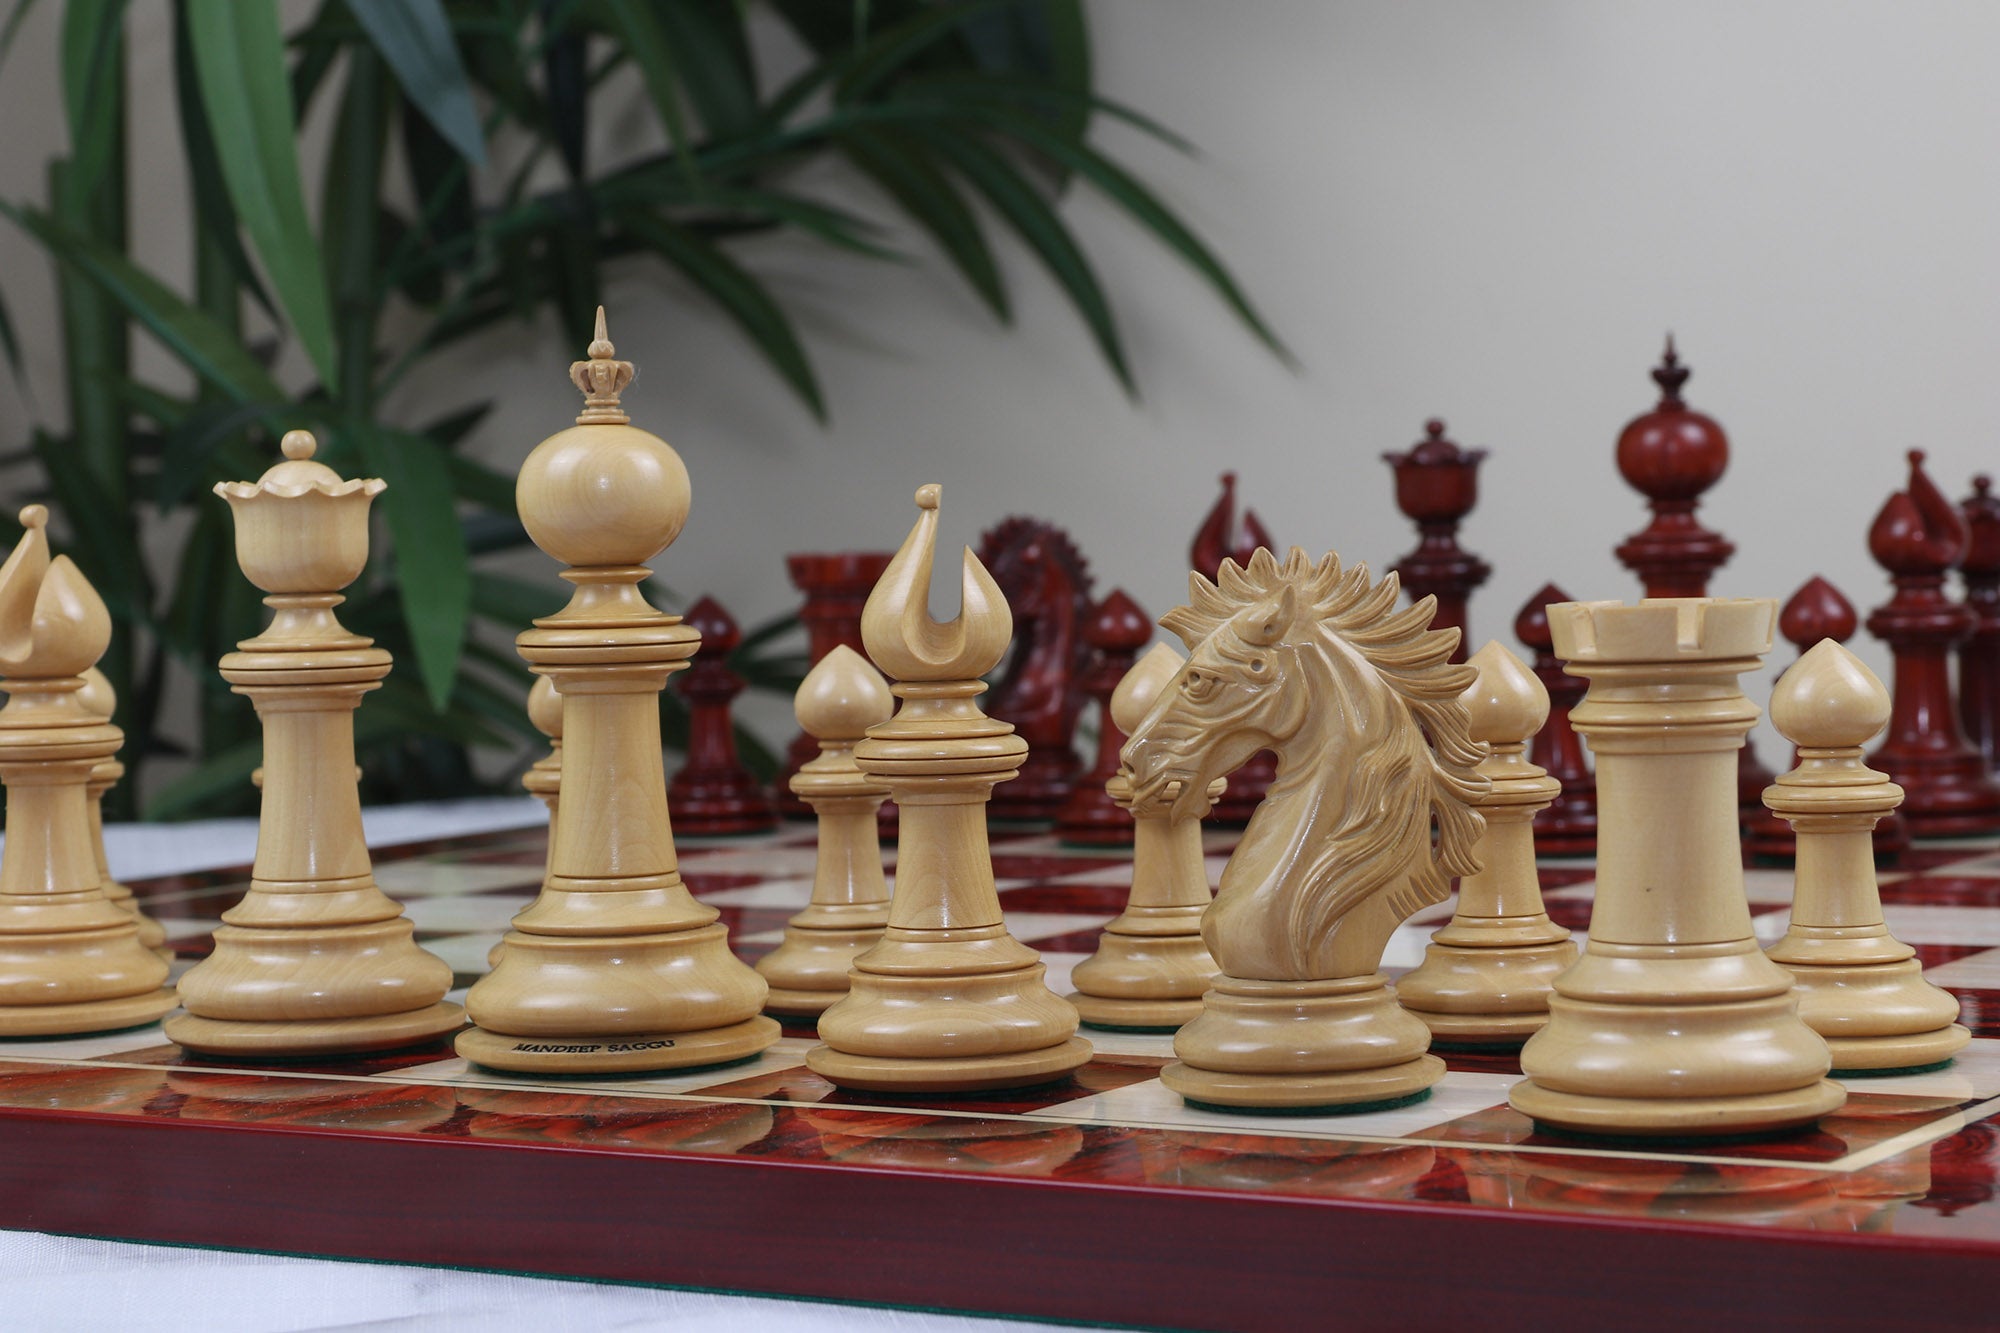 The Arthurian Series 4.4" Luxury Artisan Staunton Padouk Wood Chess Pieces